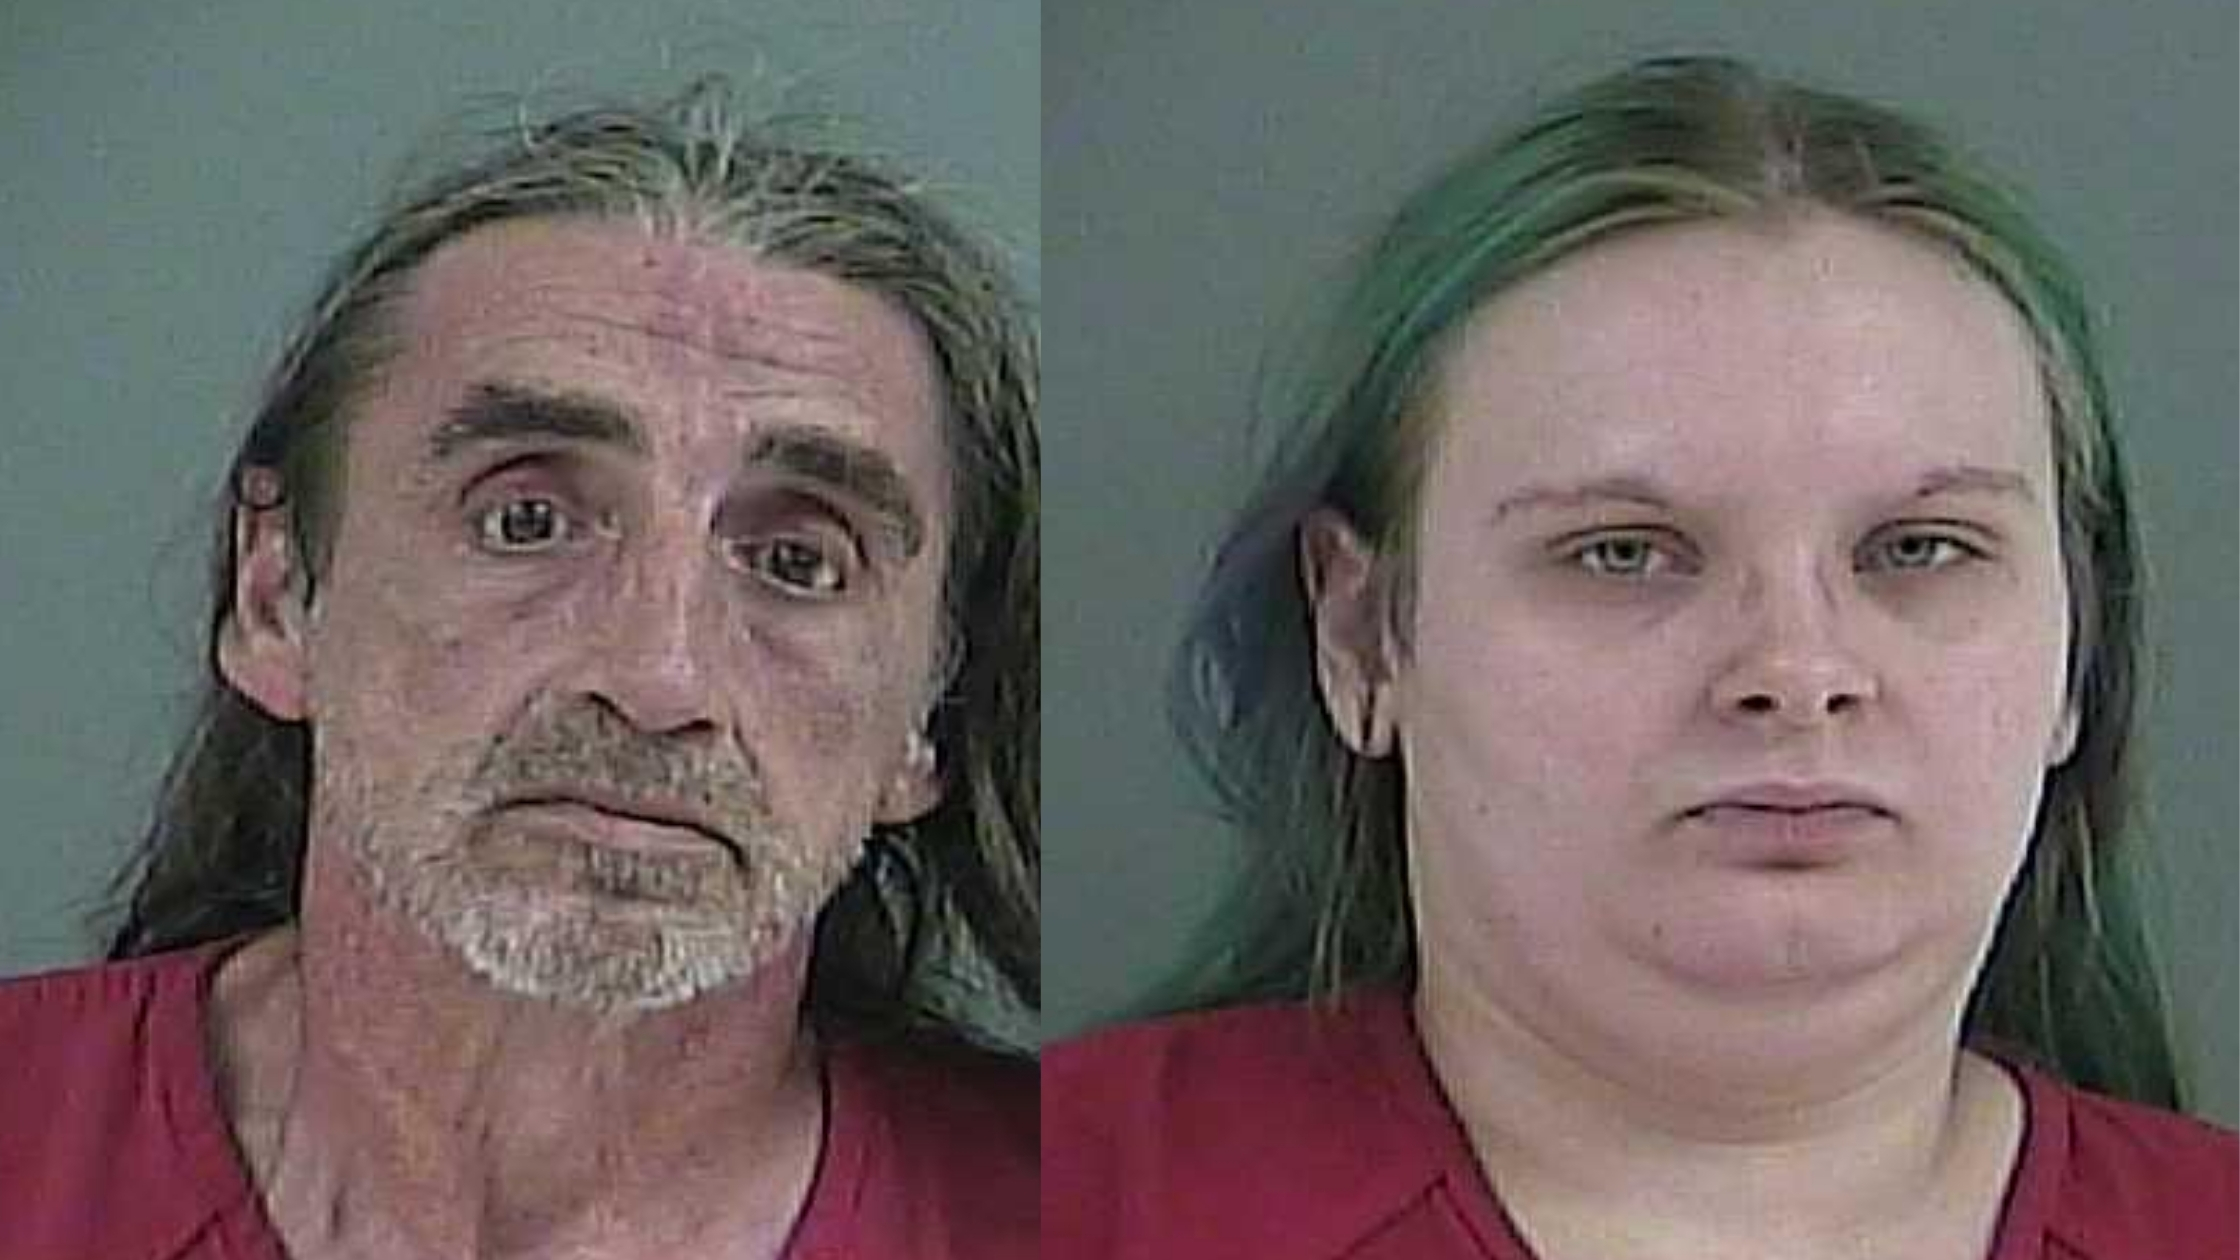 Disturbing details revealed in murder trial of couple accused of killing, dismembering Oak Ridge woman pic